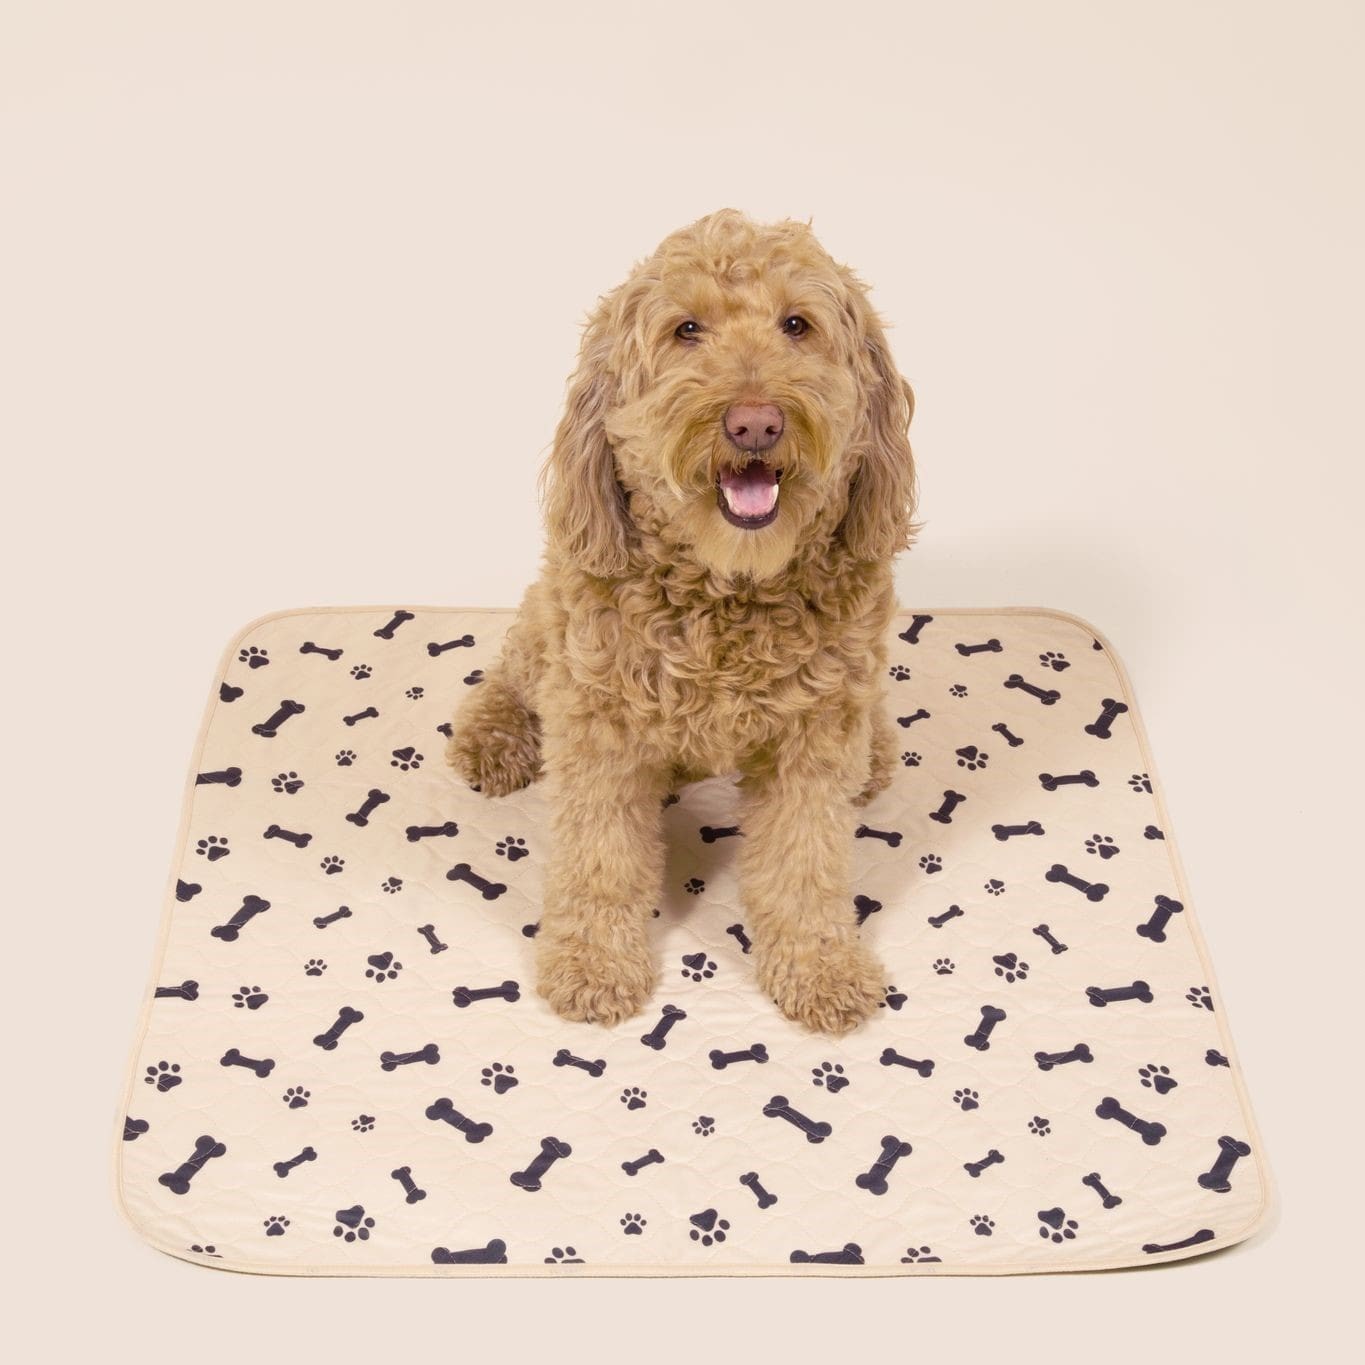 A beige dog sitting on a pee pad